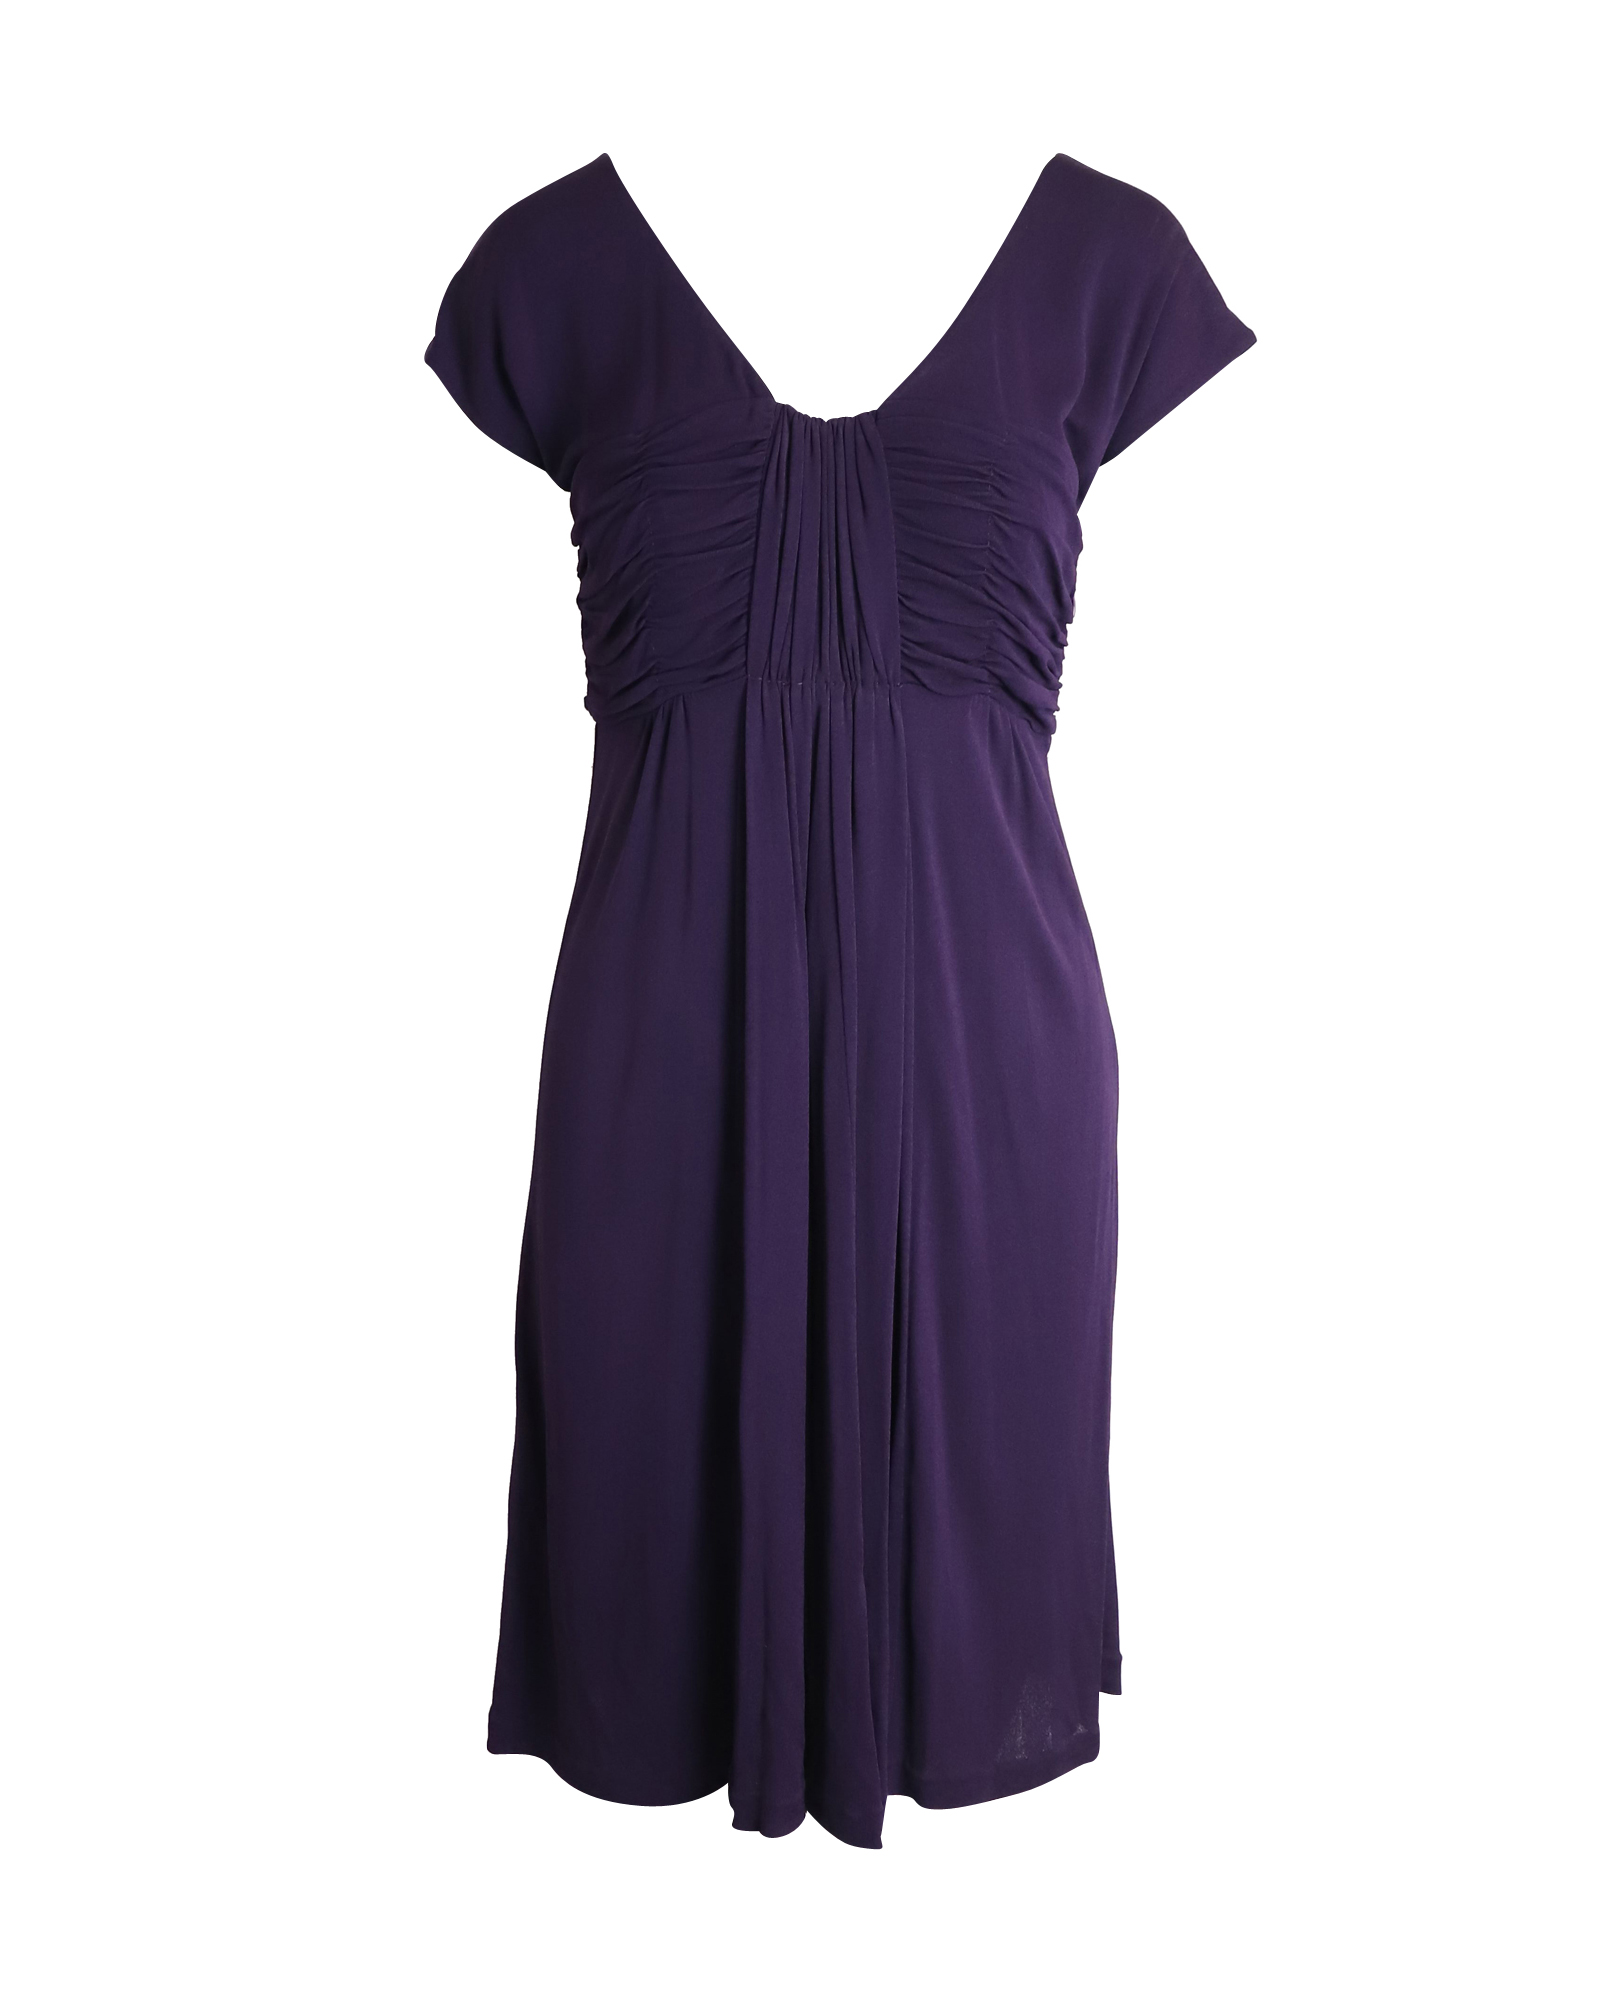 Elegant Knee Length Dress in Purple Rayon